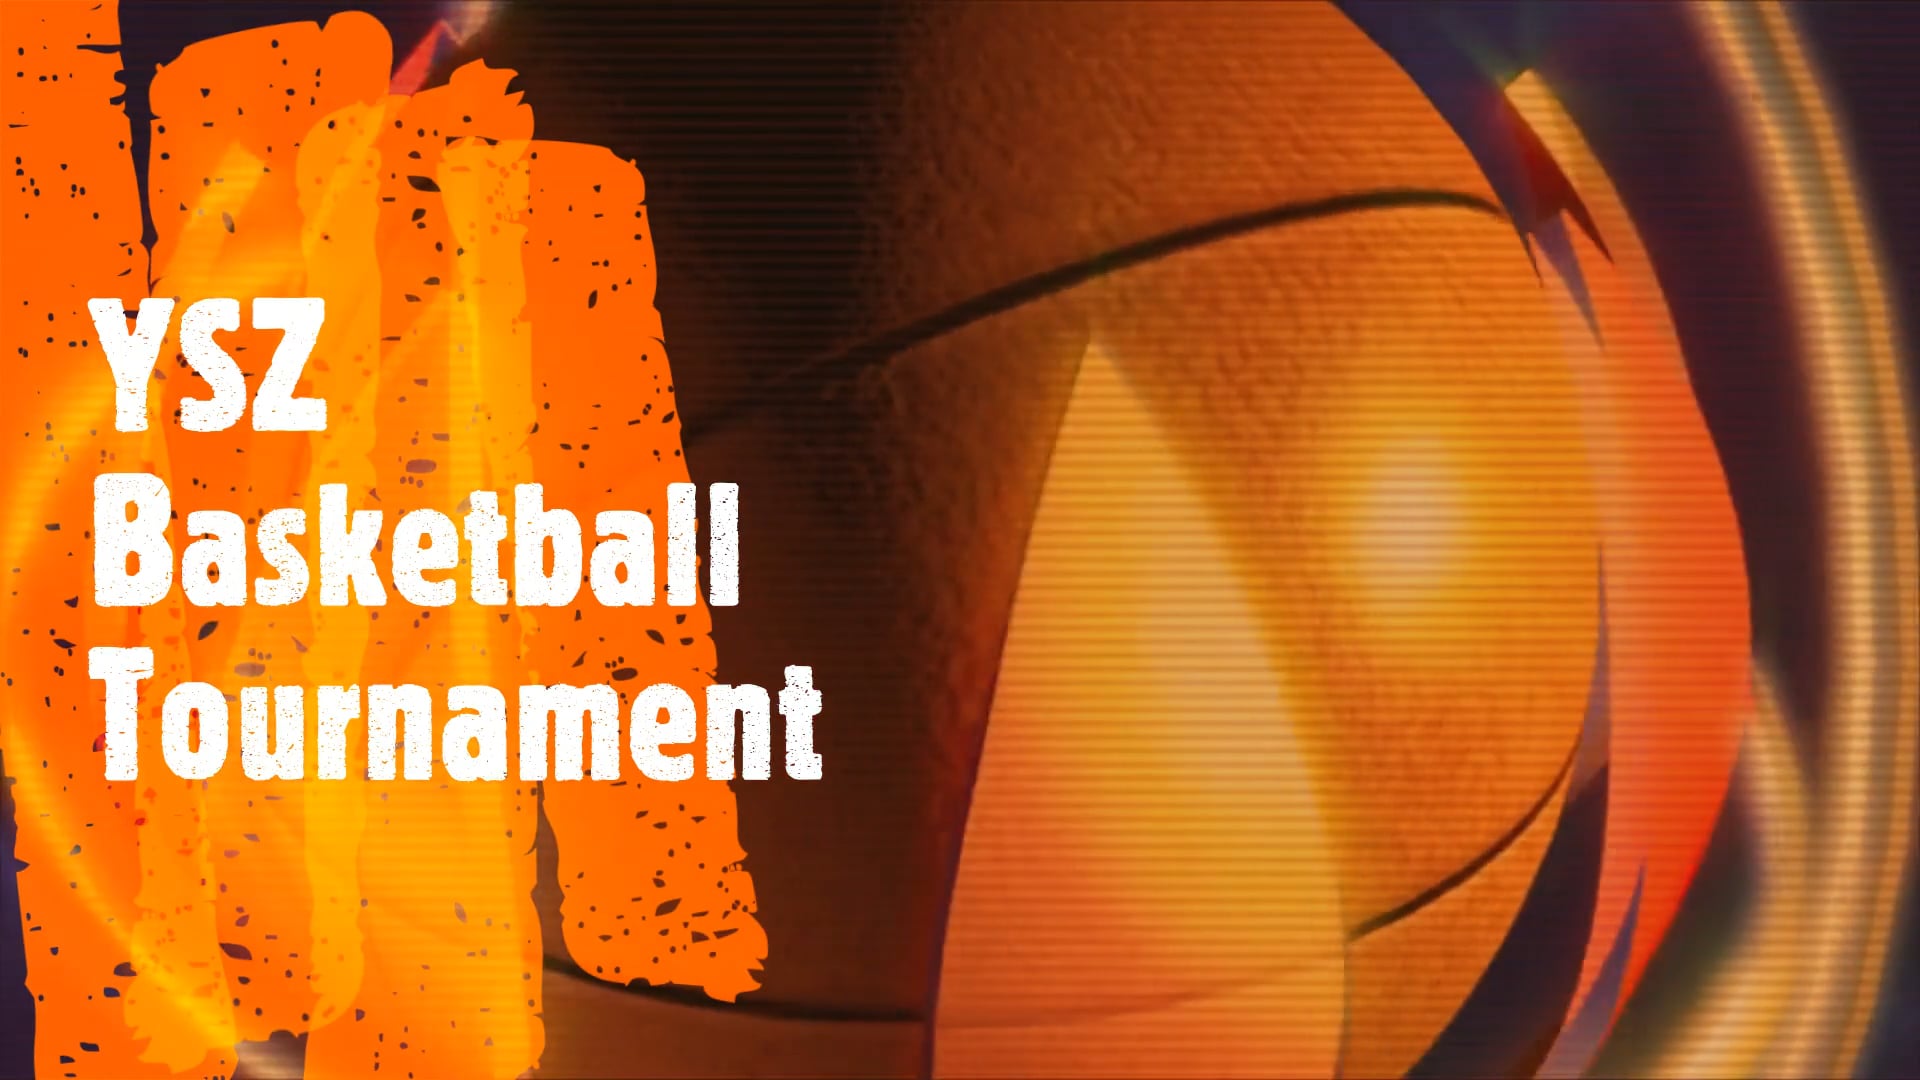 YSZ Basketball Tournament!